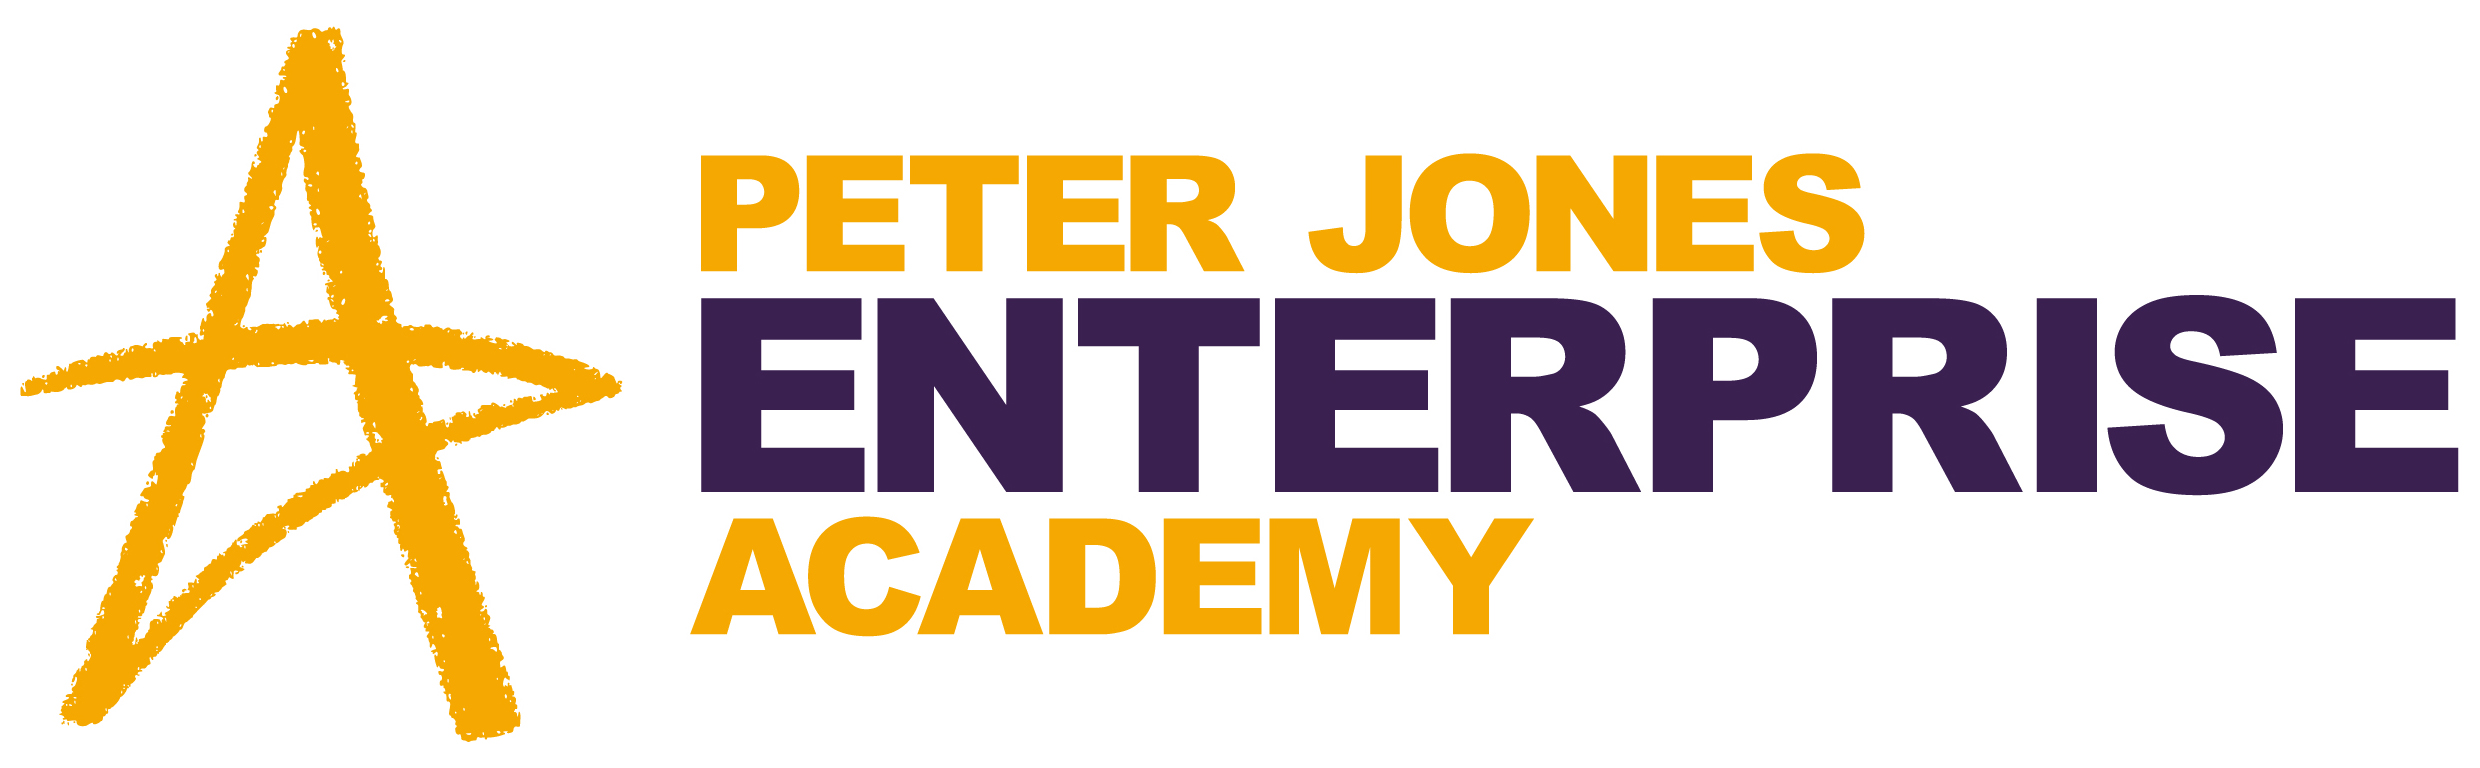 Peter Jones Enterprise Academy logo